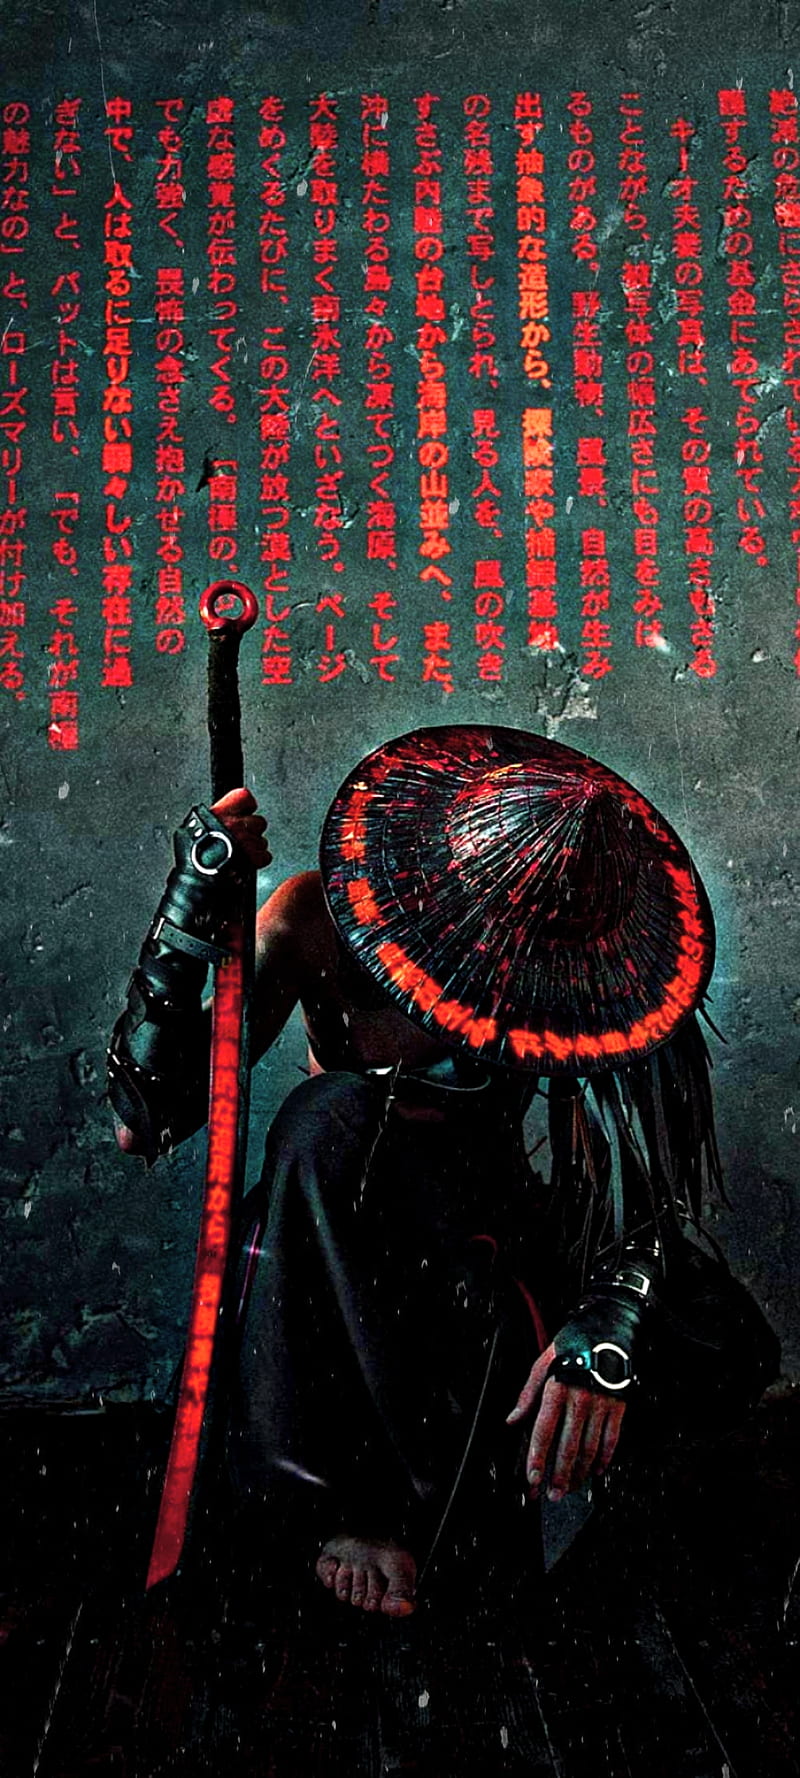 Red Samurai wallpaper by EKOMIER2  Download on ZEDGE  5947